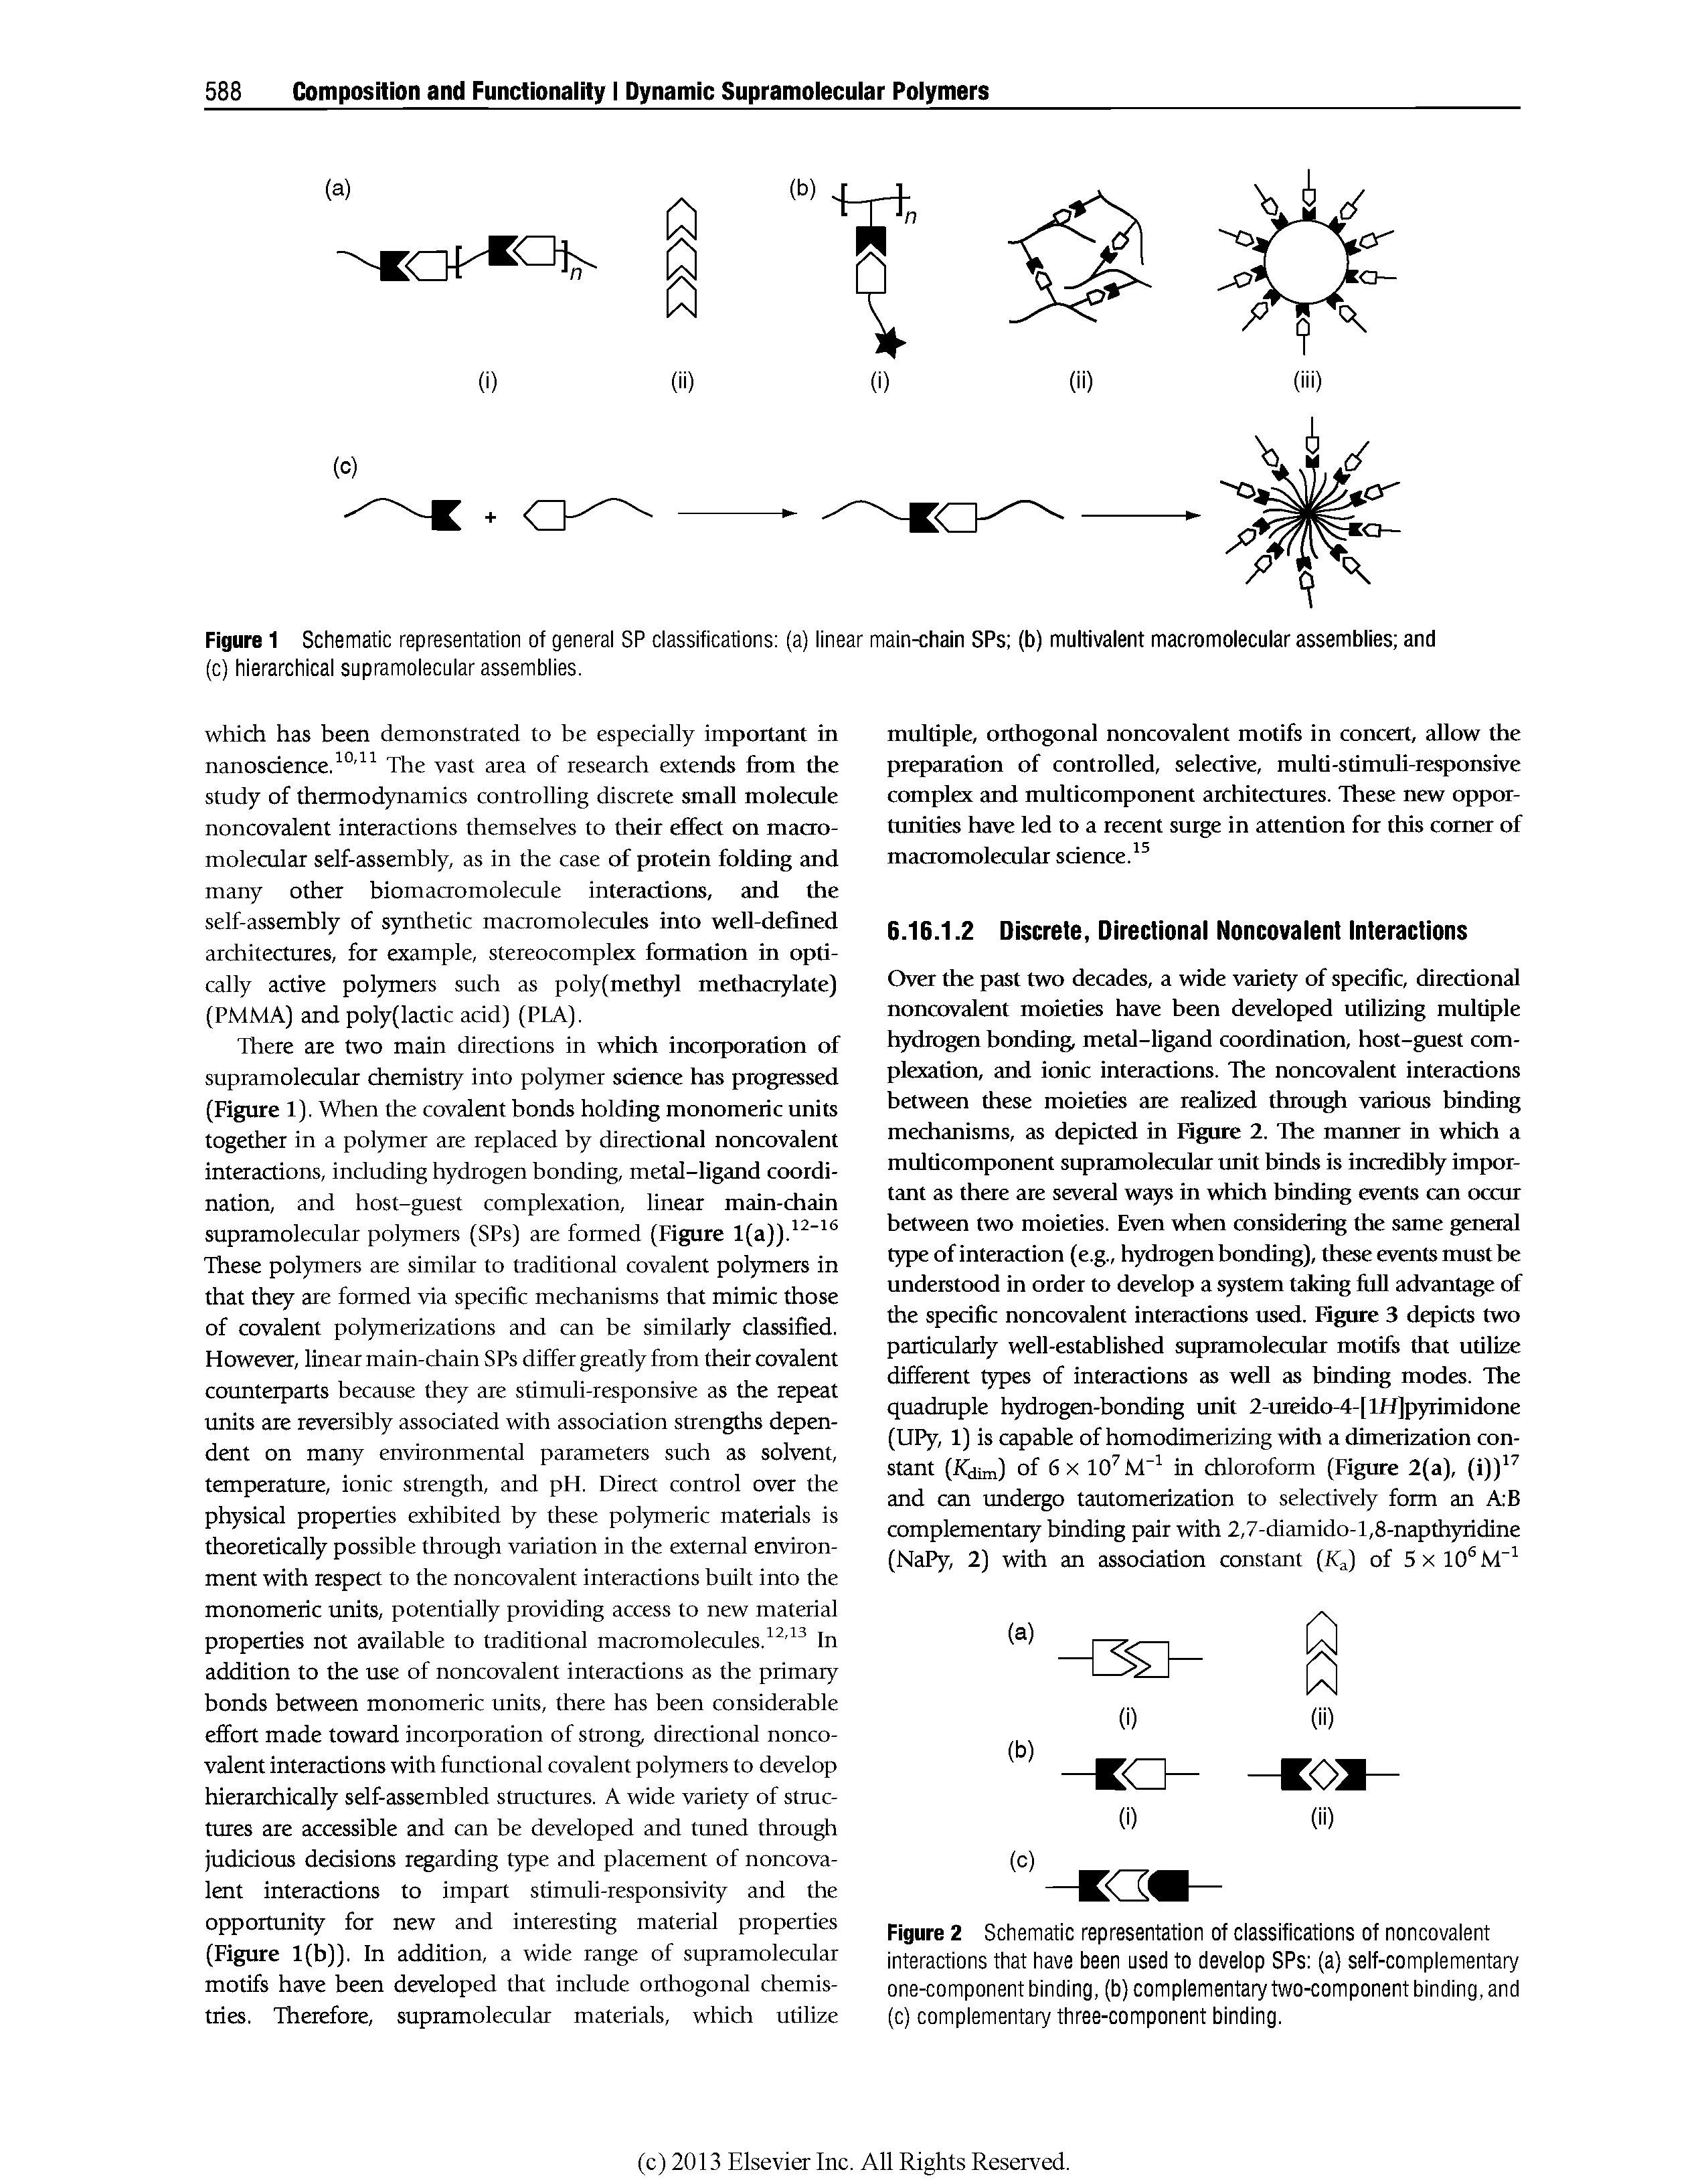 Figure 1 Schematic representation of general SP classifications (a) linear main-chain SPs (b) multivalent macromolecular assemblies and (c) hierarchical supramolecular assemblies.